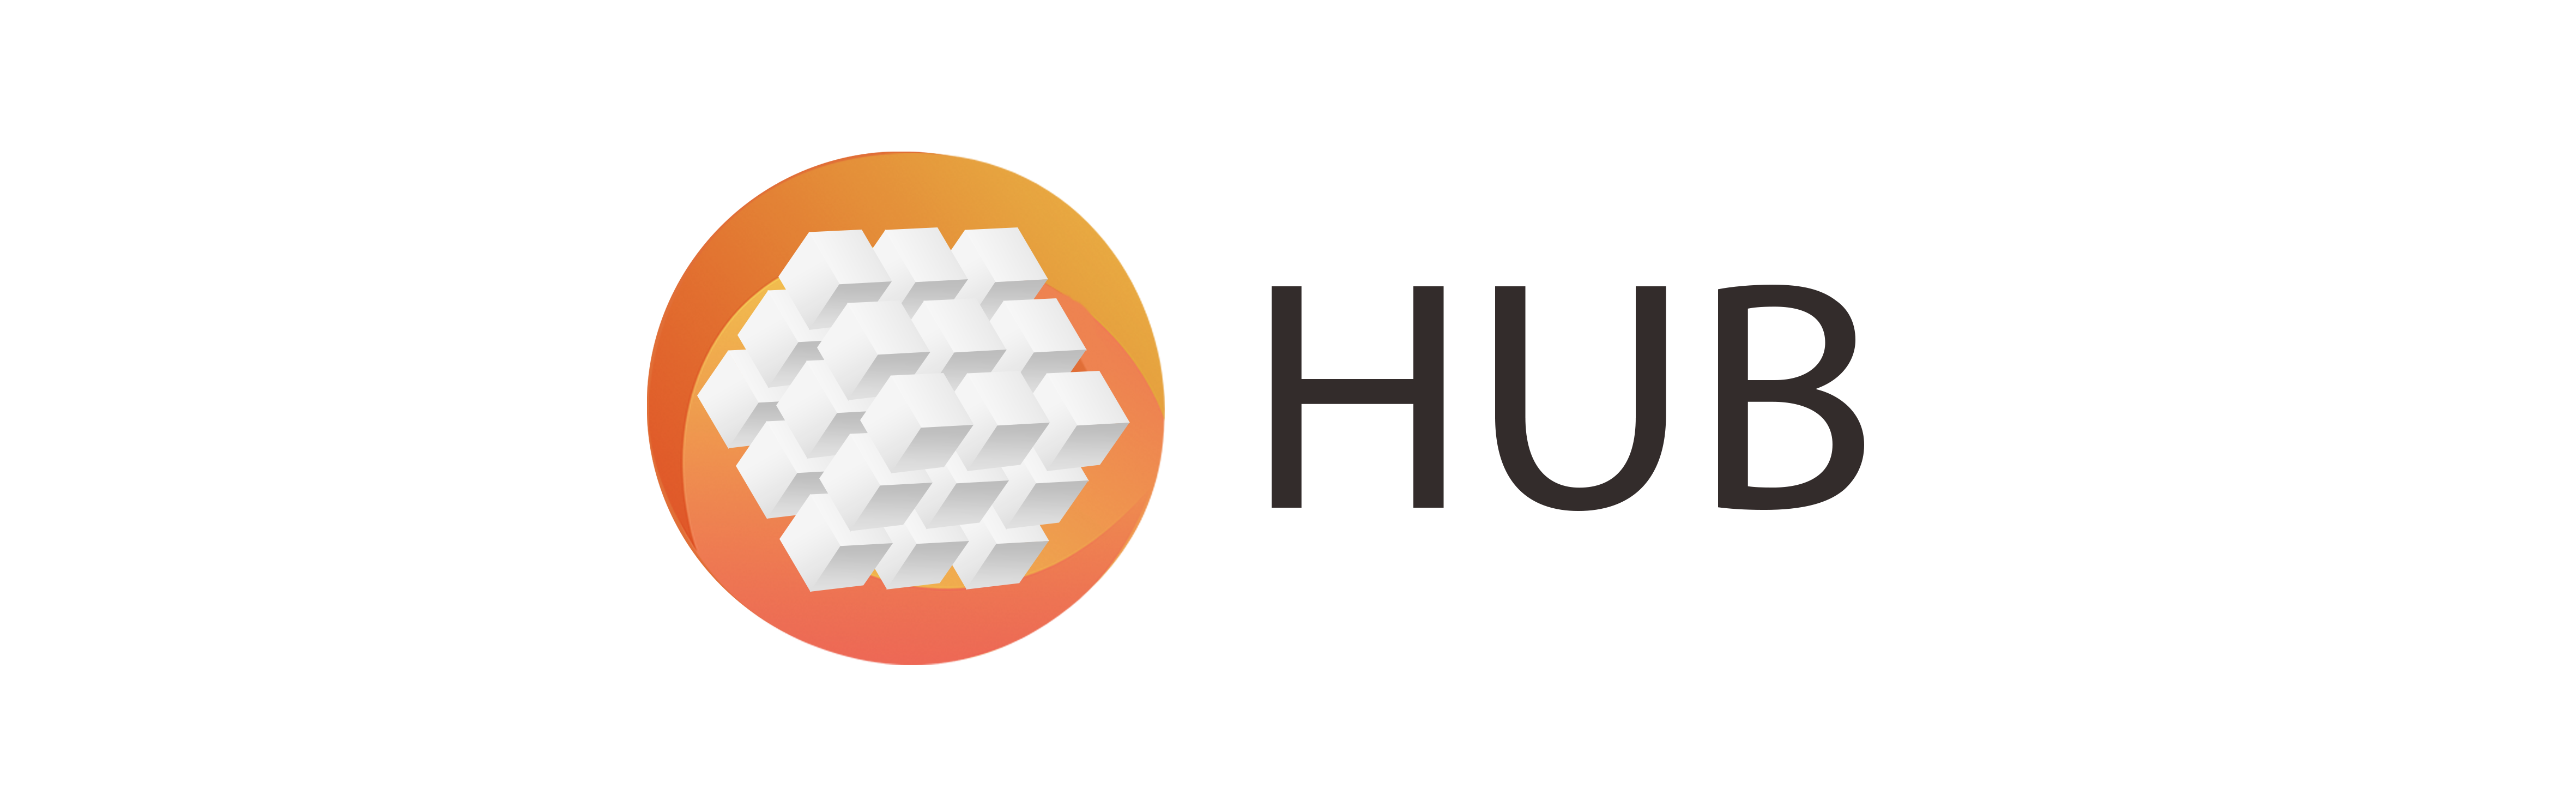 ../_images/hub_logo.png